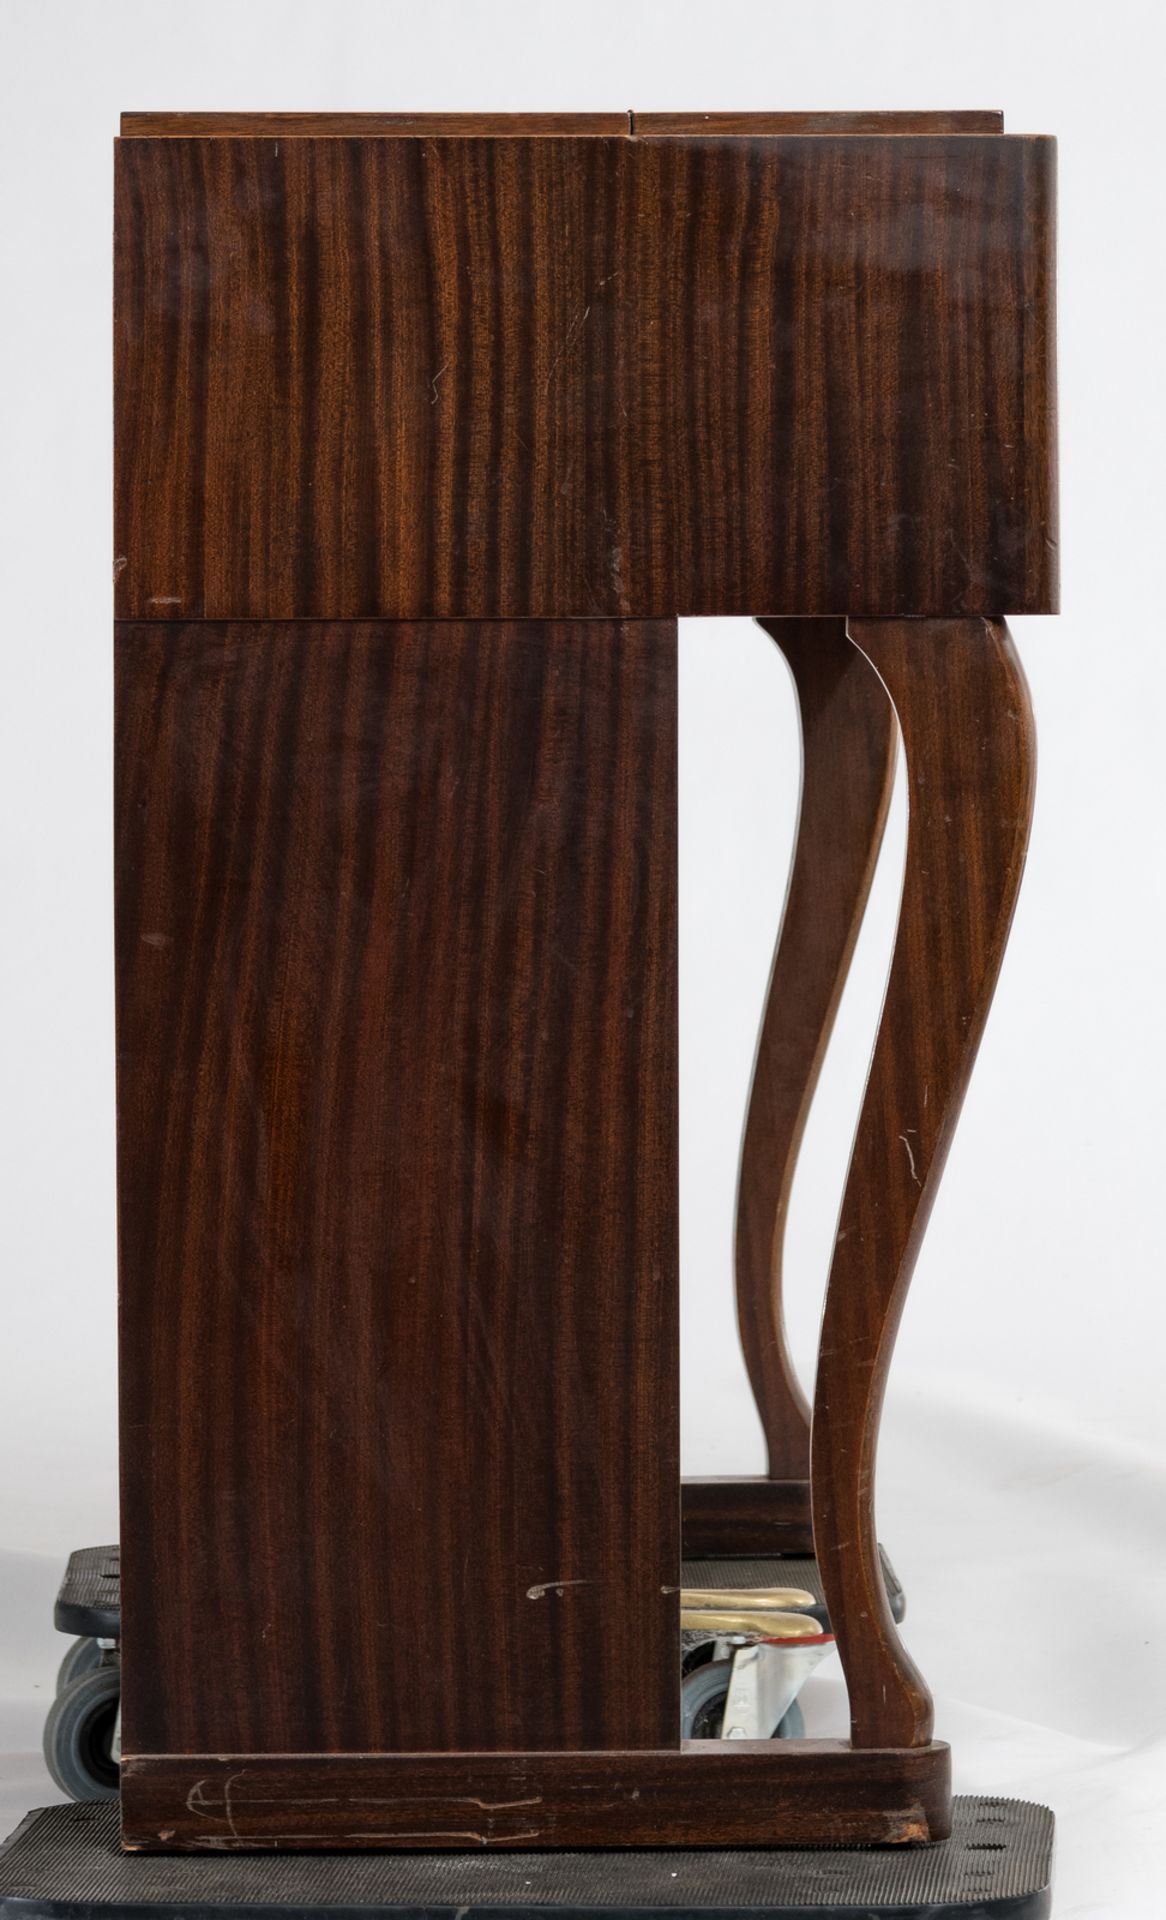 A mahogany and walnut veneered piano, Menuet Gaveau by André Arbus, Paris, H 95,5 - W 138,5 - D 52 - Image 5 of 11